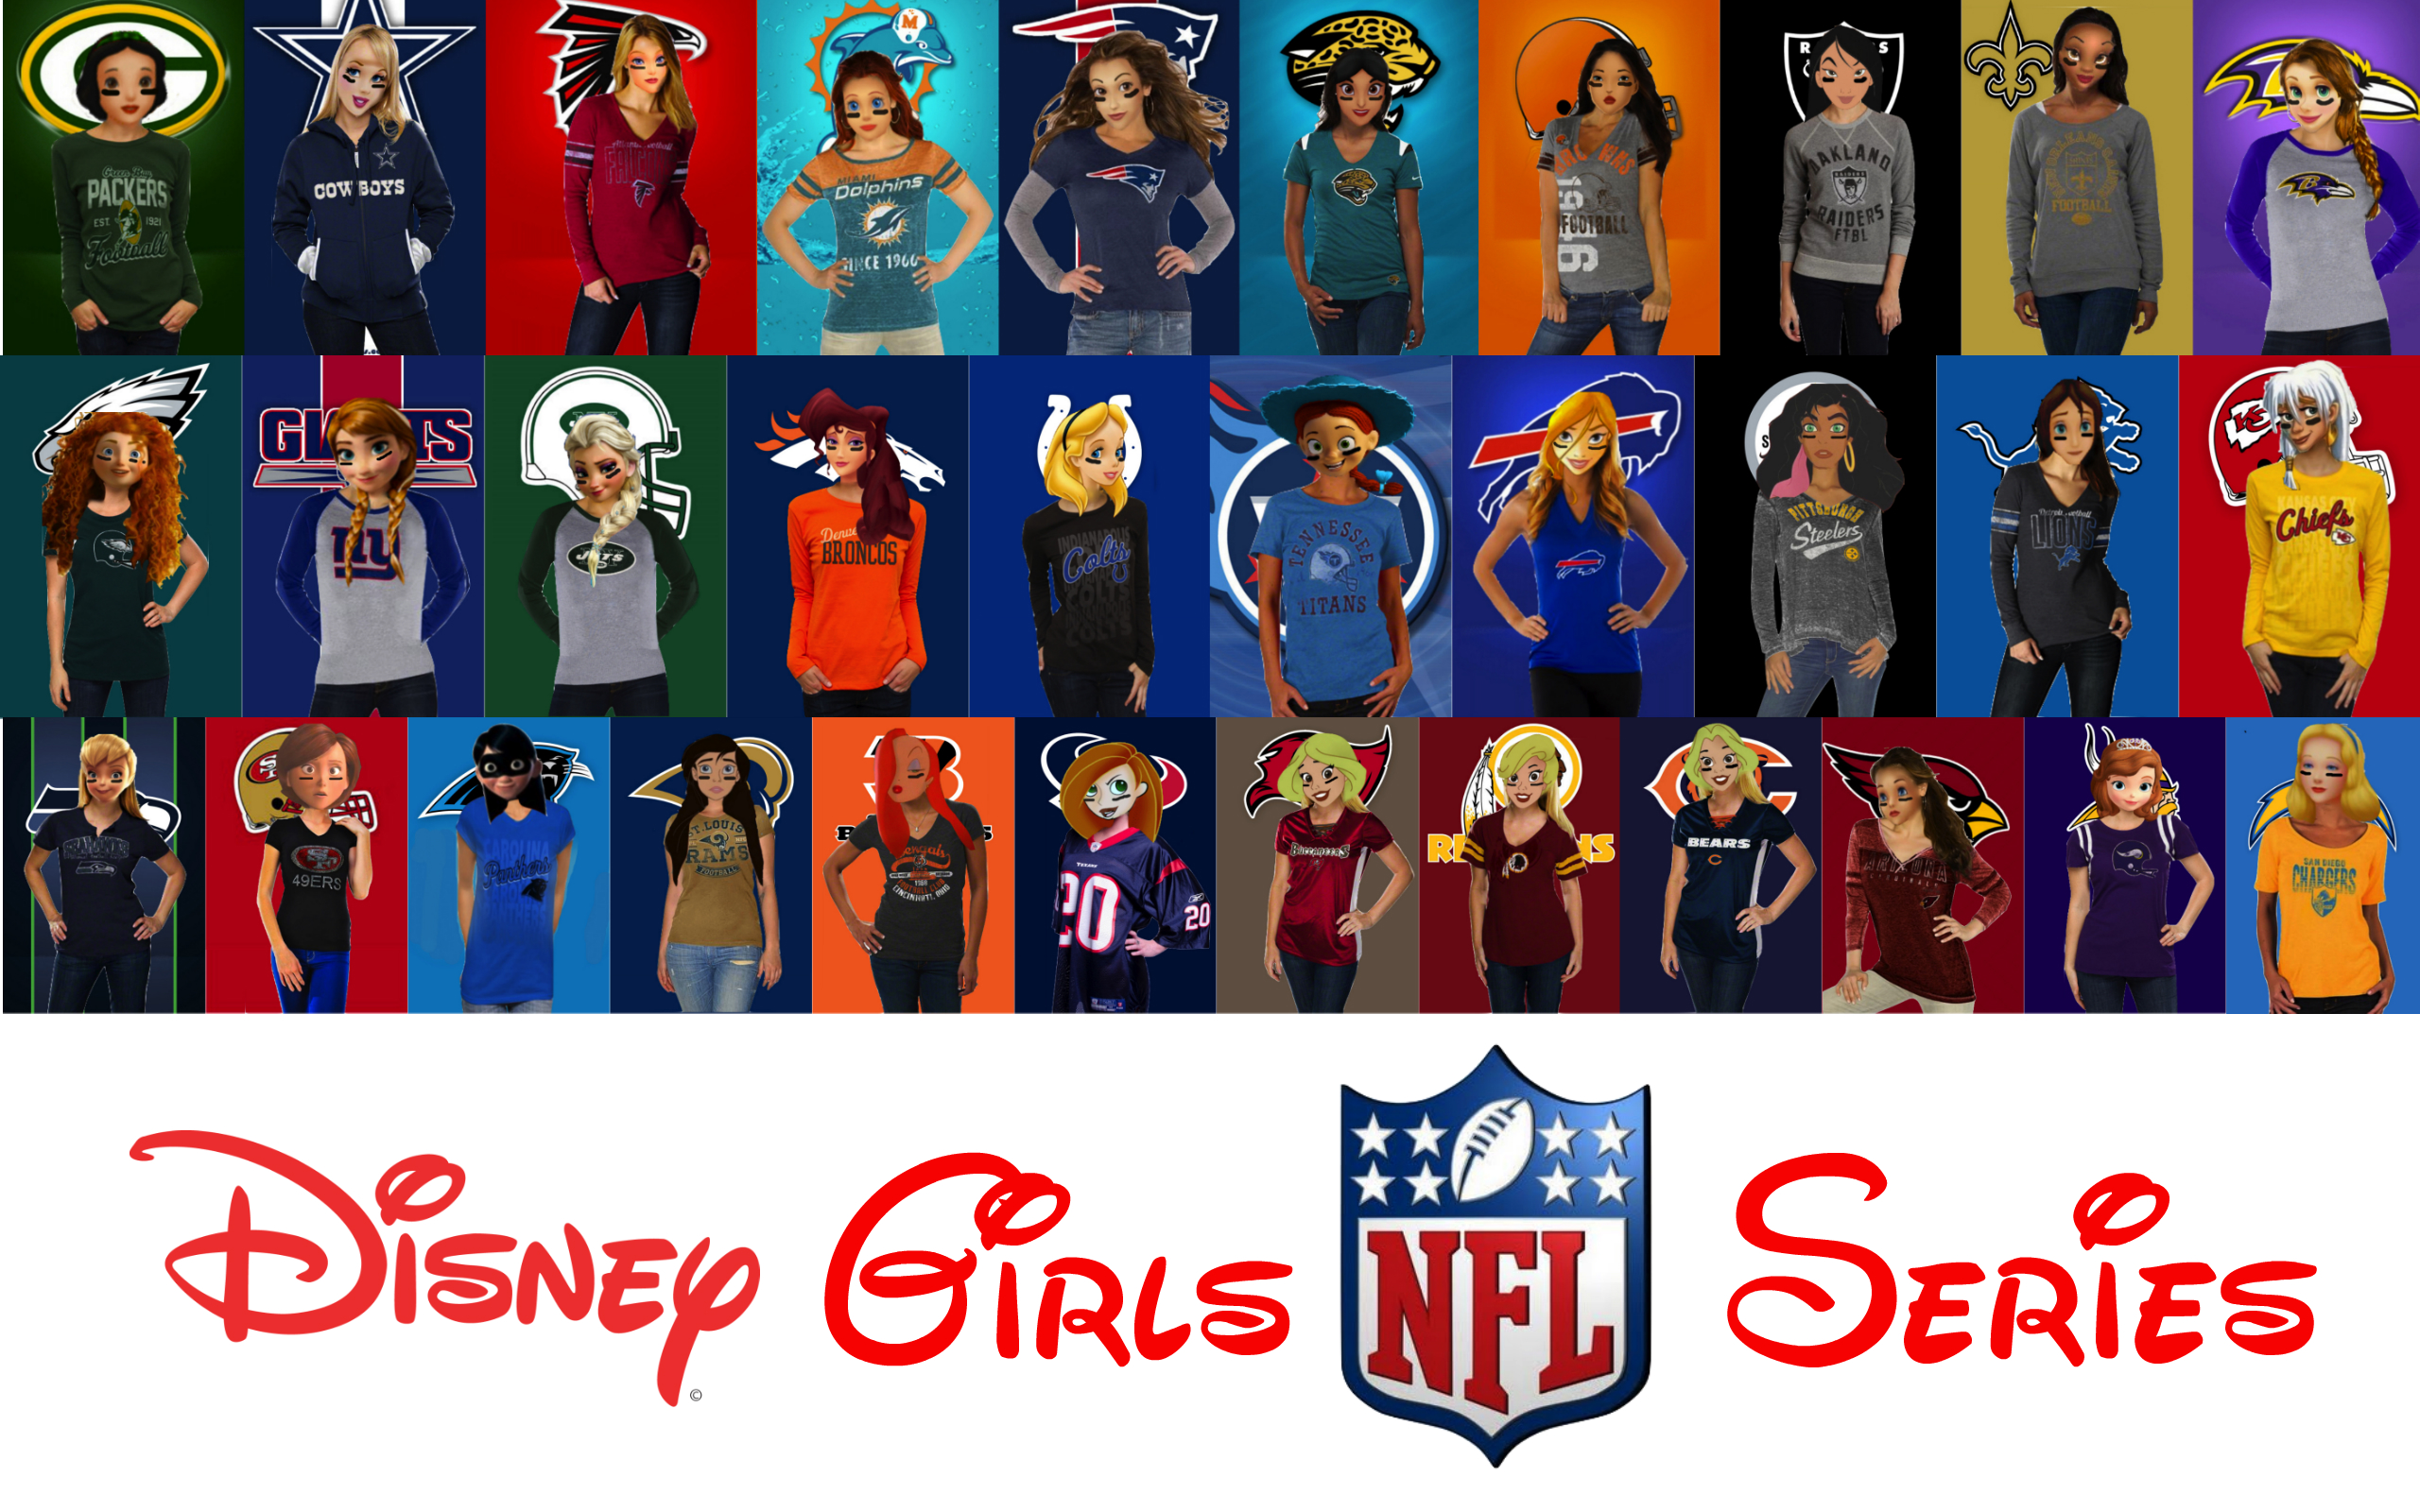 All Nfl Teams Wallpaper Disney girls nfl series poster